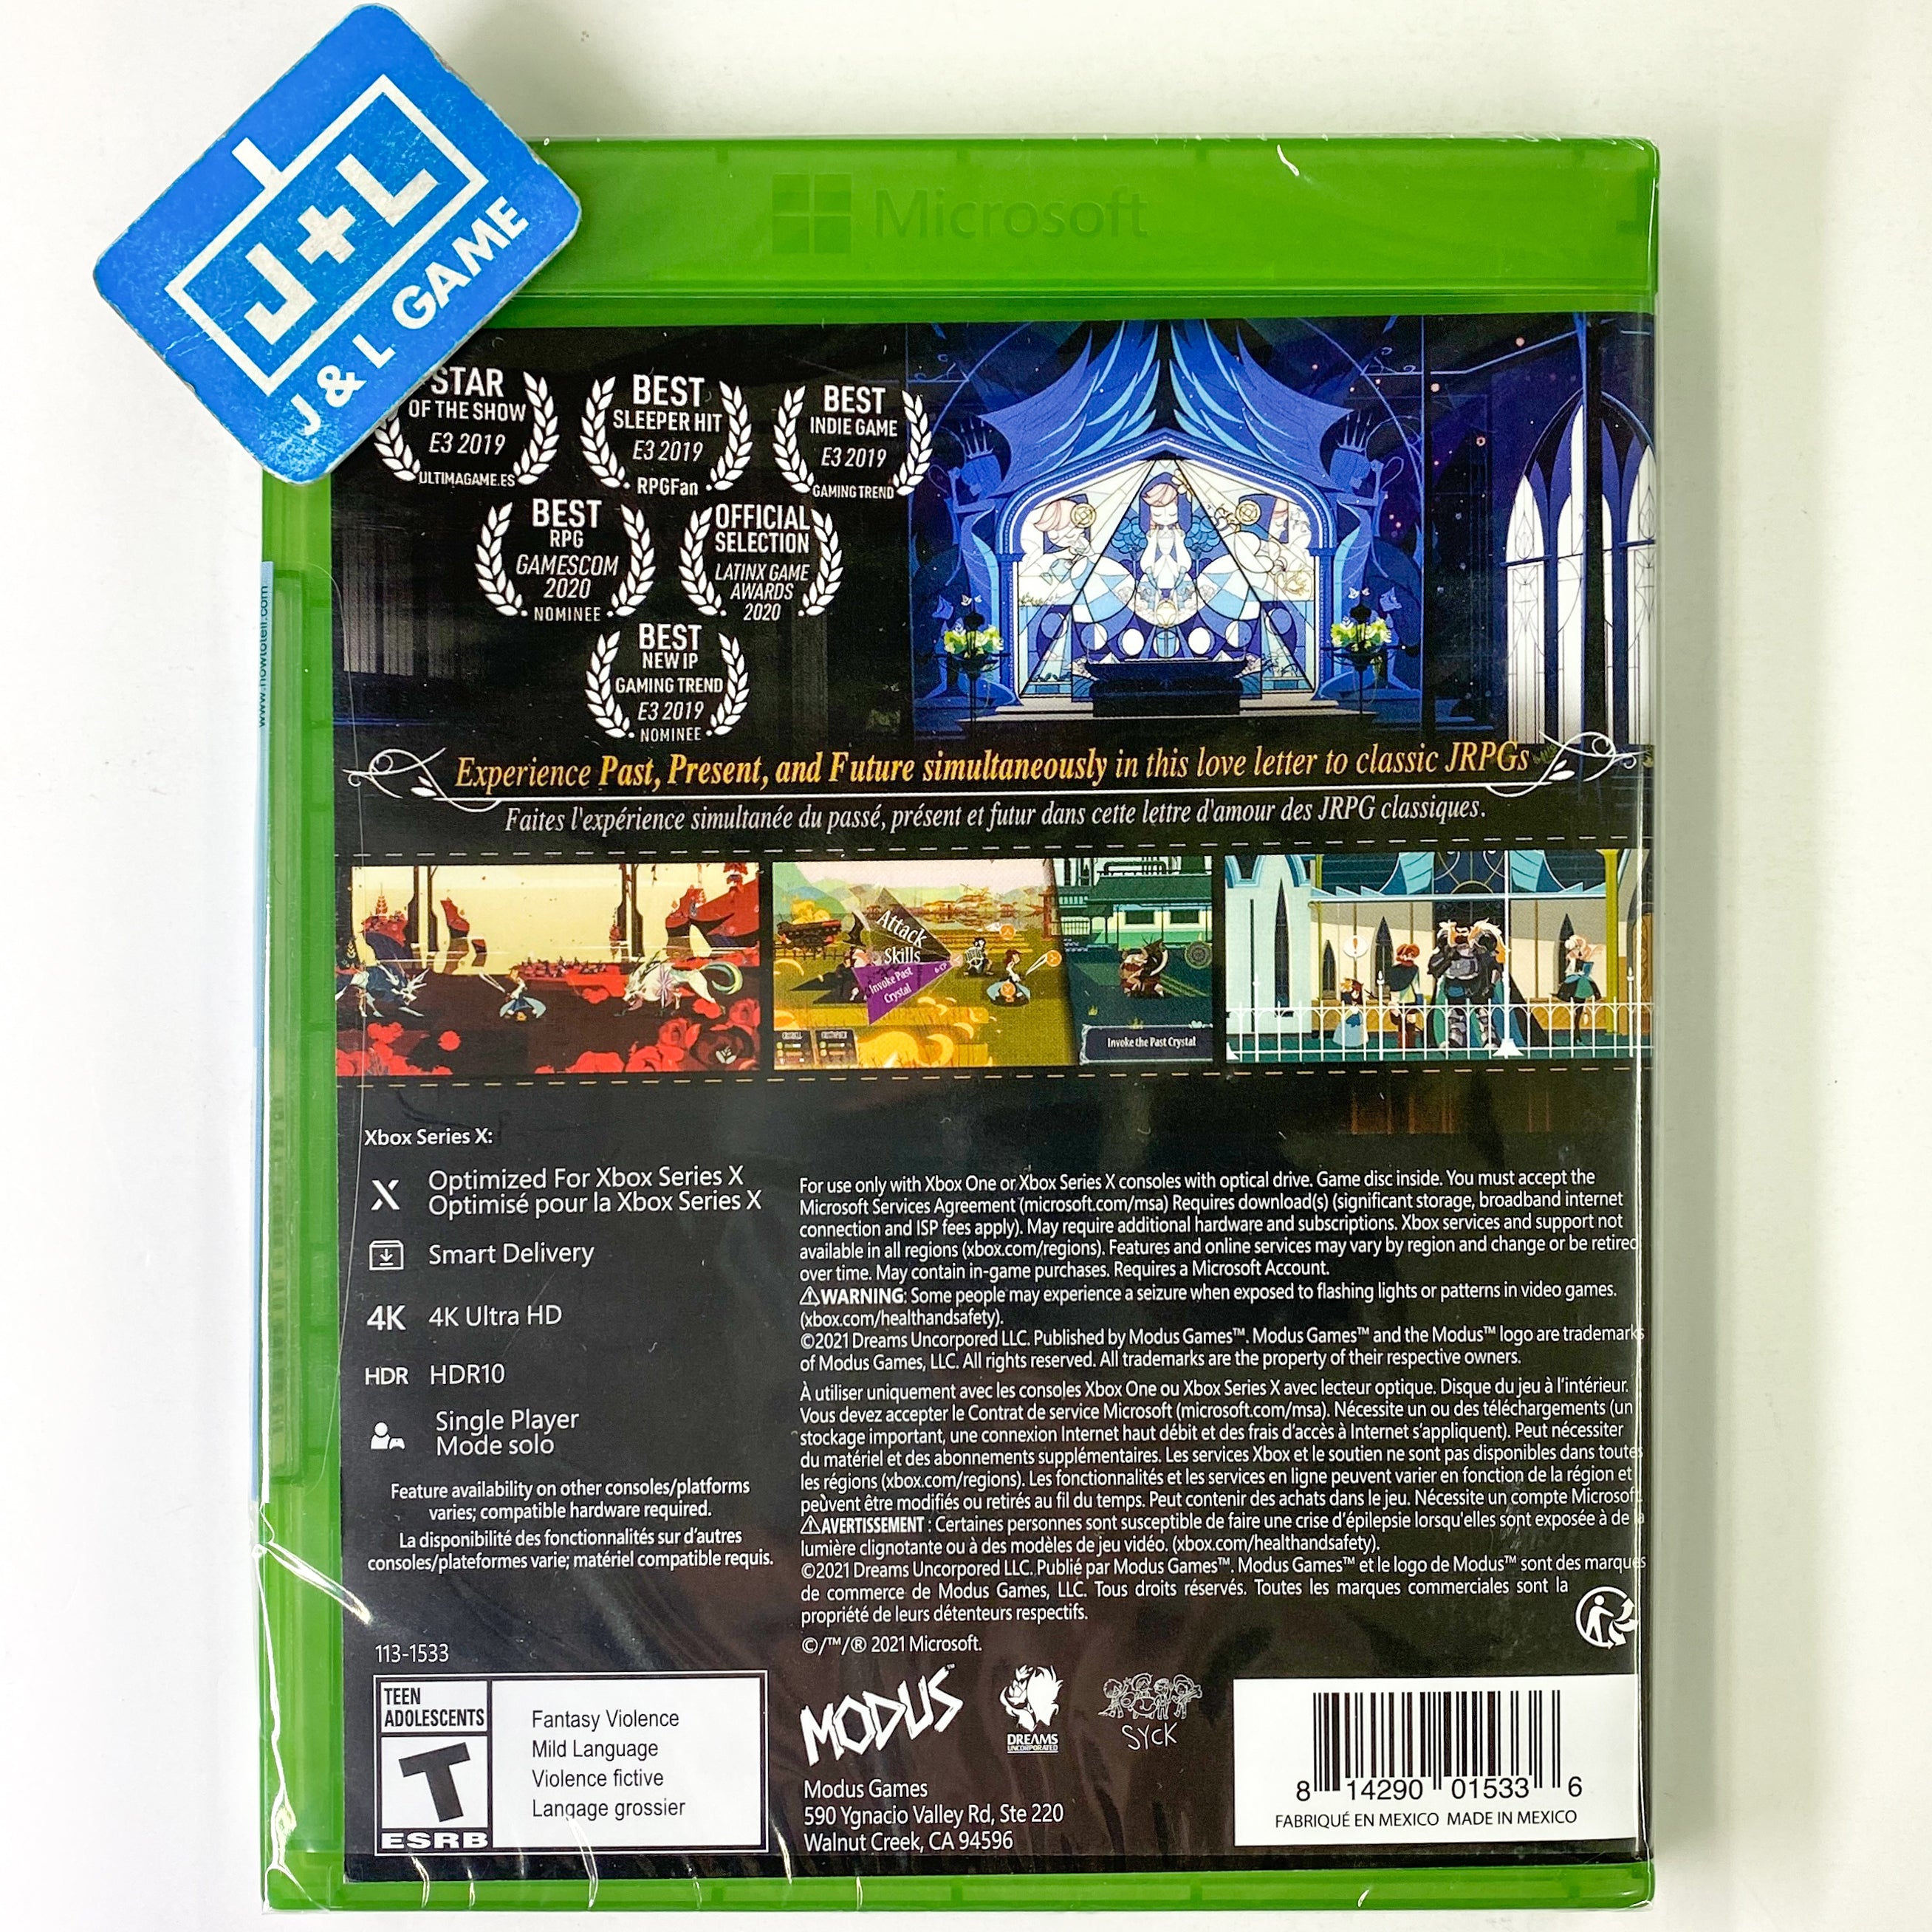 Cris Tales - (XSX) Xbox Series X Video Games Modus   